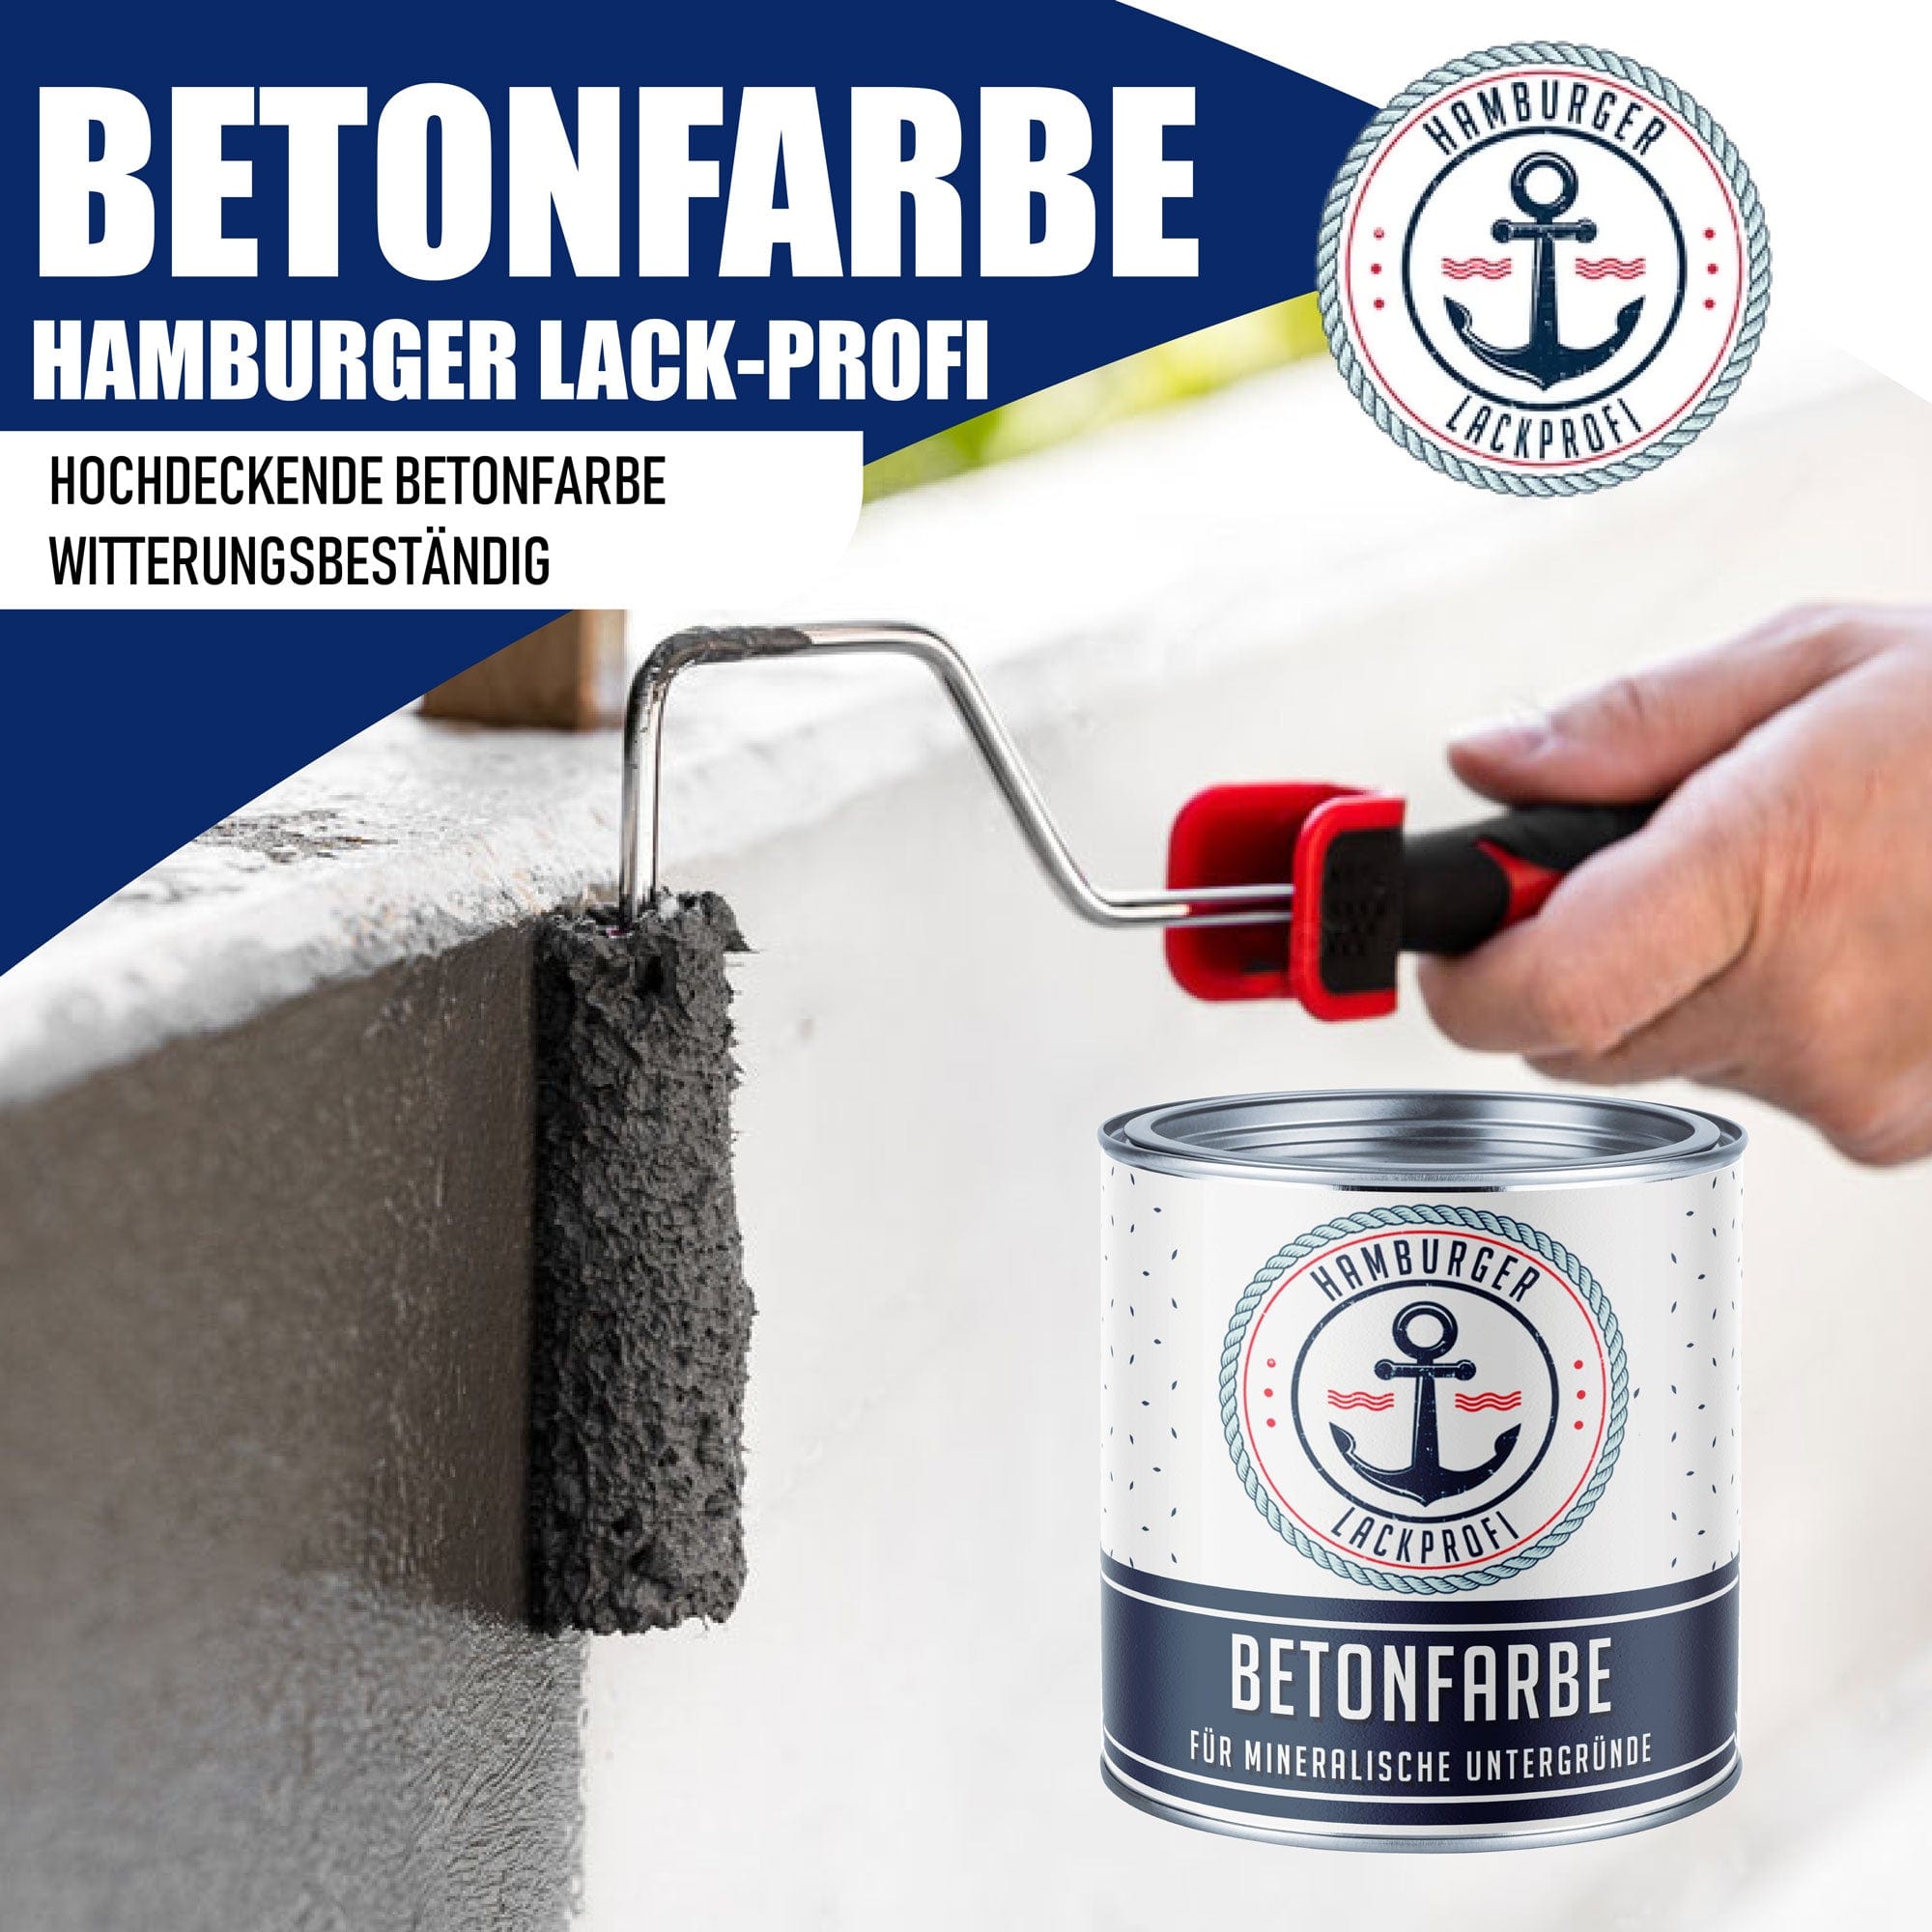 Hamburger Lack-Profi Lacke & Beschichtungen Hamburger Lack-Profi Betonfarbe mit Lackierset (X300) & Verdünnung (1 L) - 30% Sparangebot